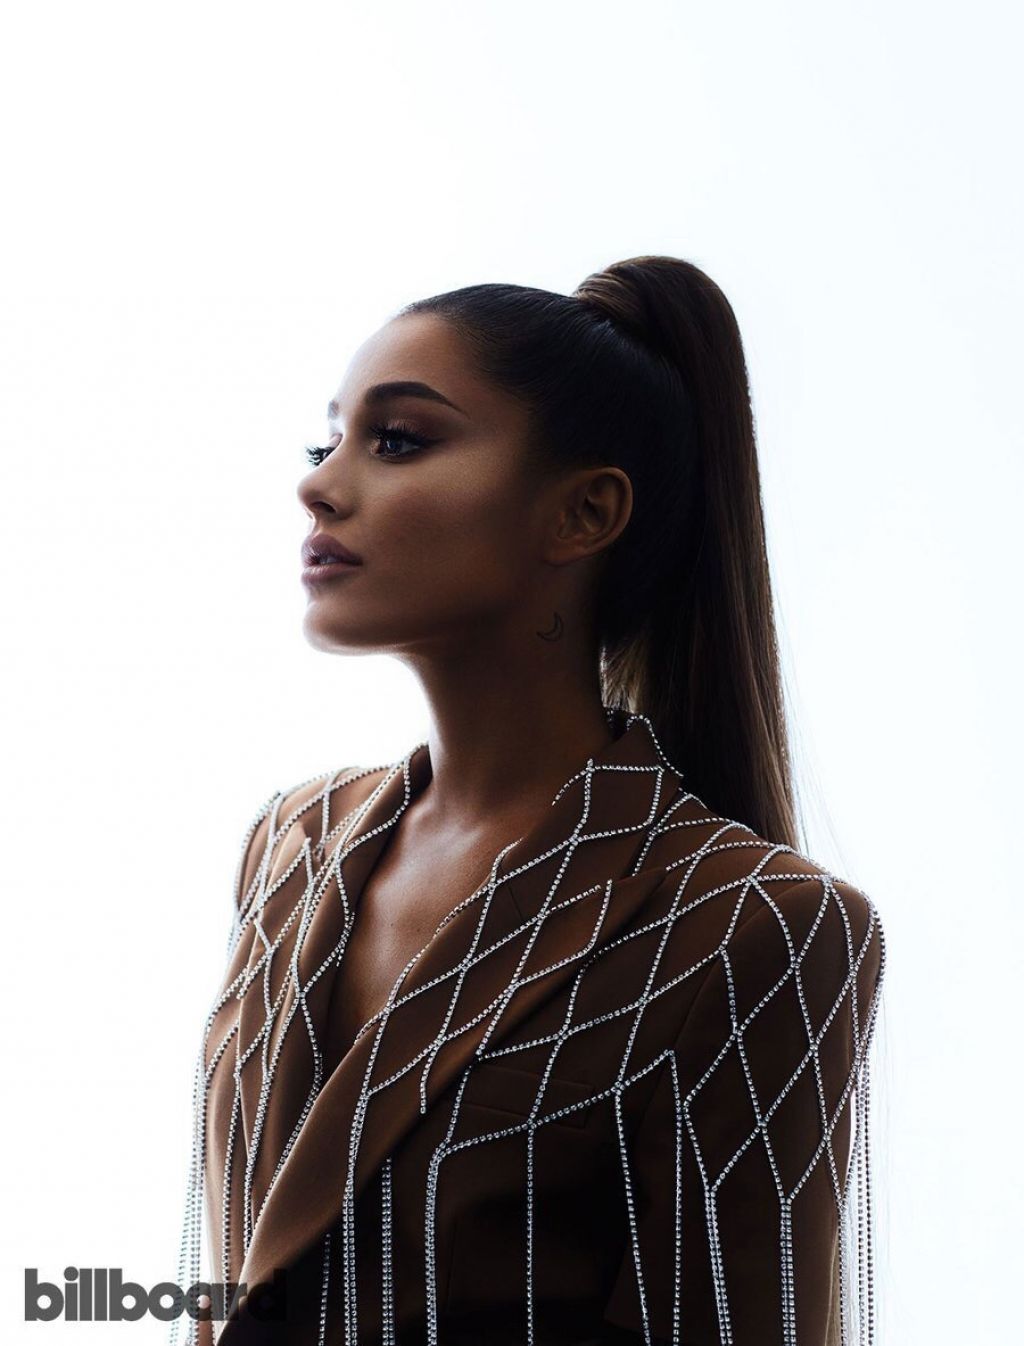 12 Ariana Grande Photoshoot Billboard Pictures